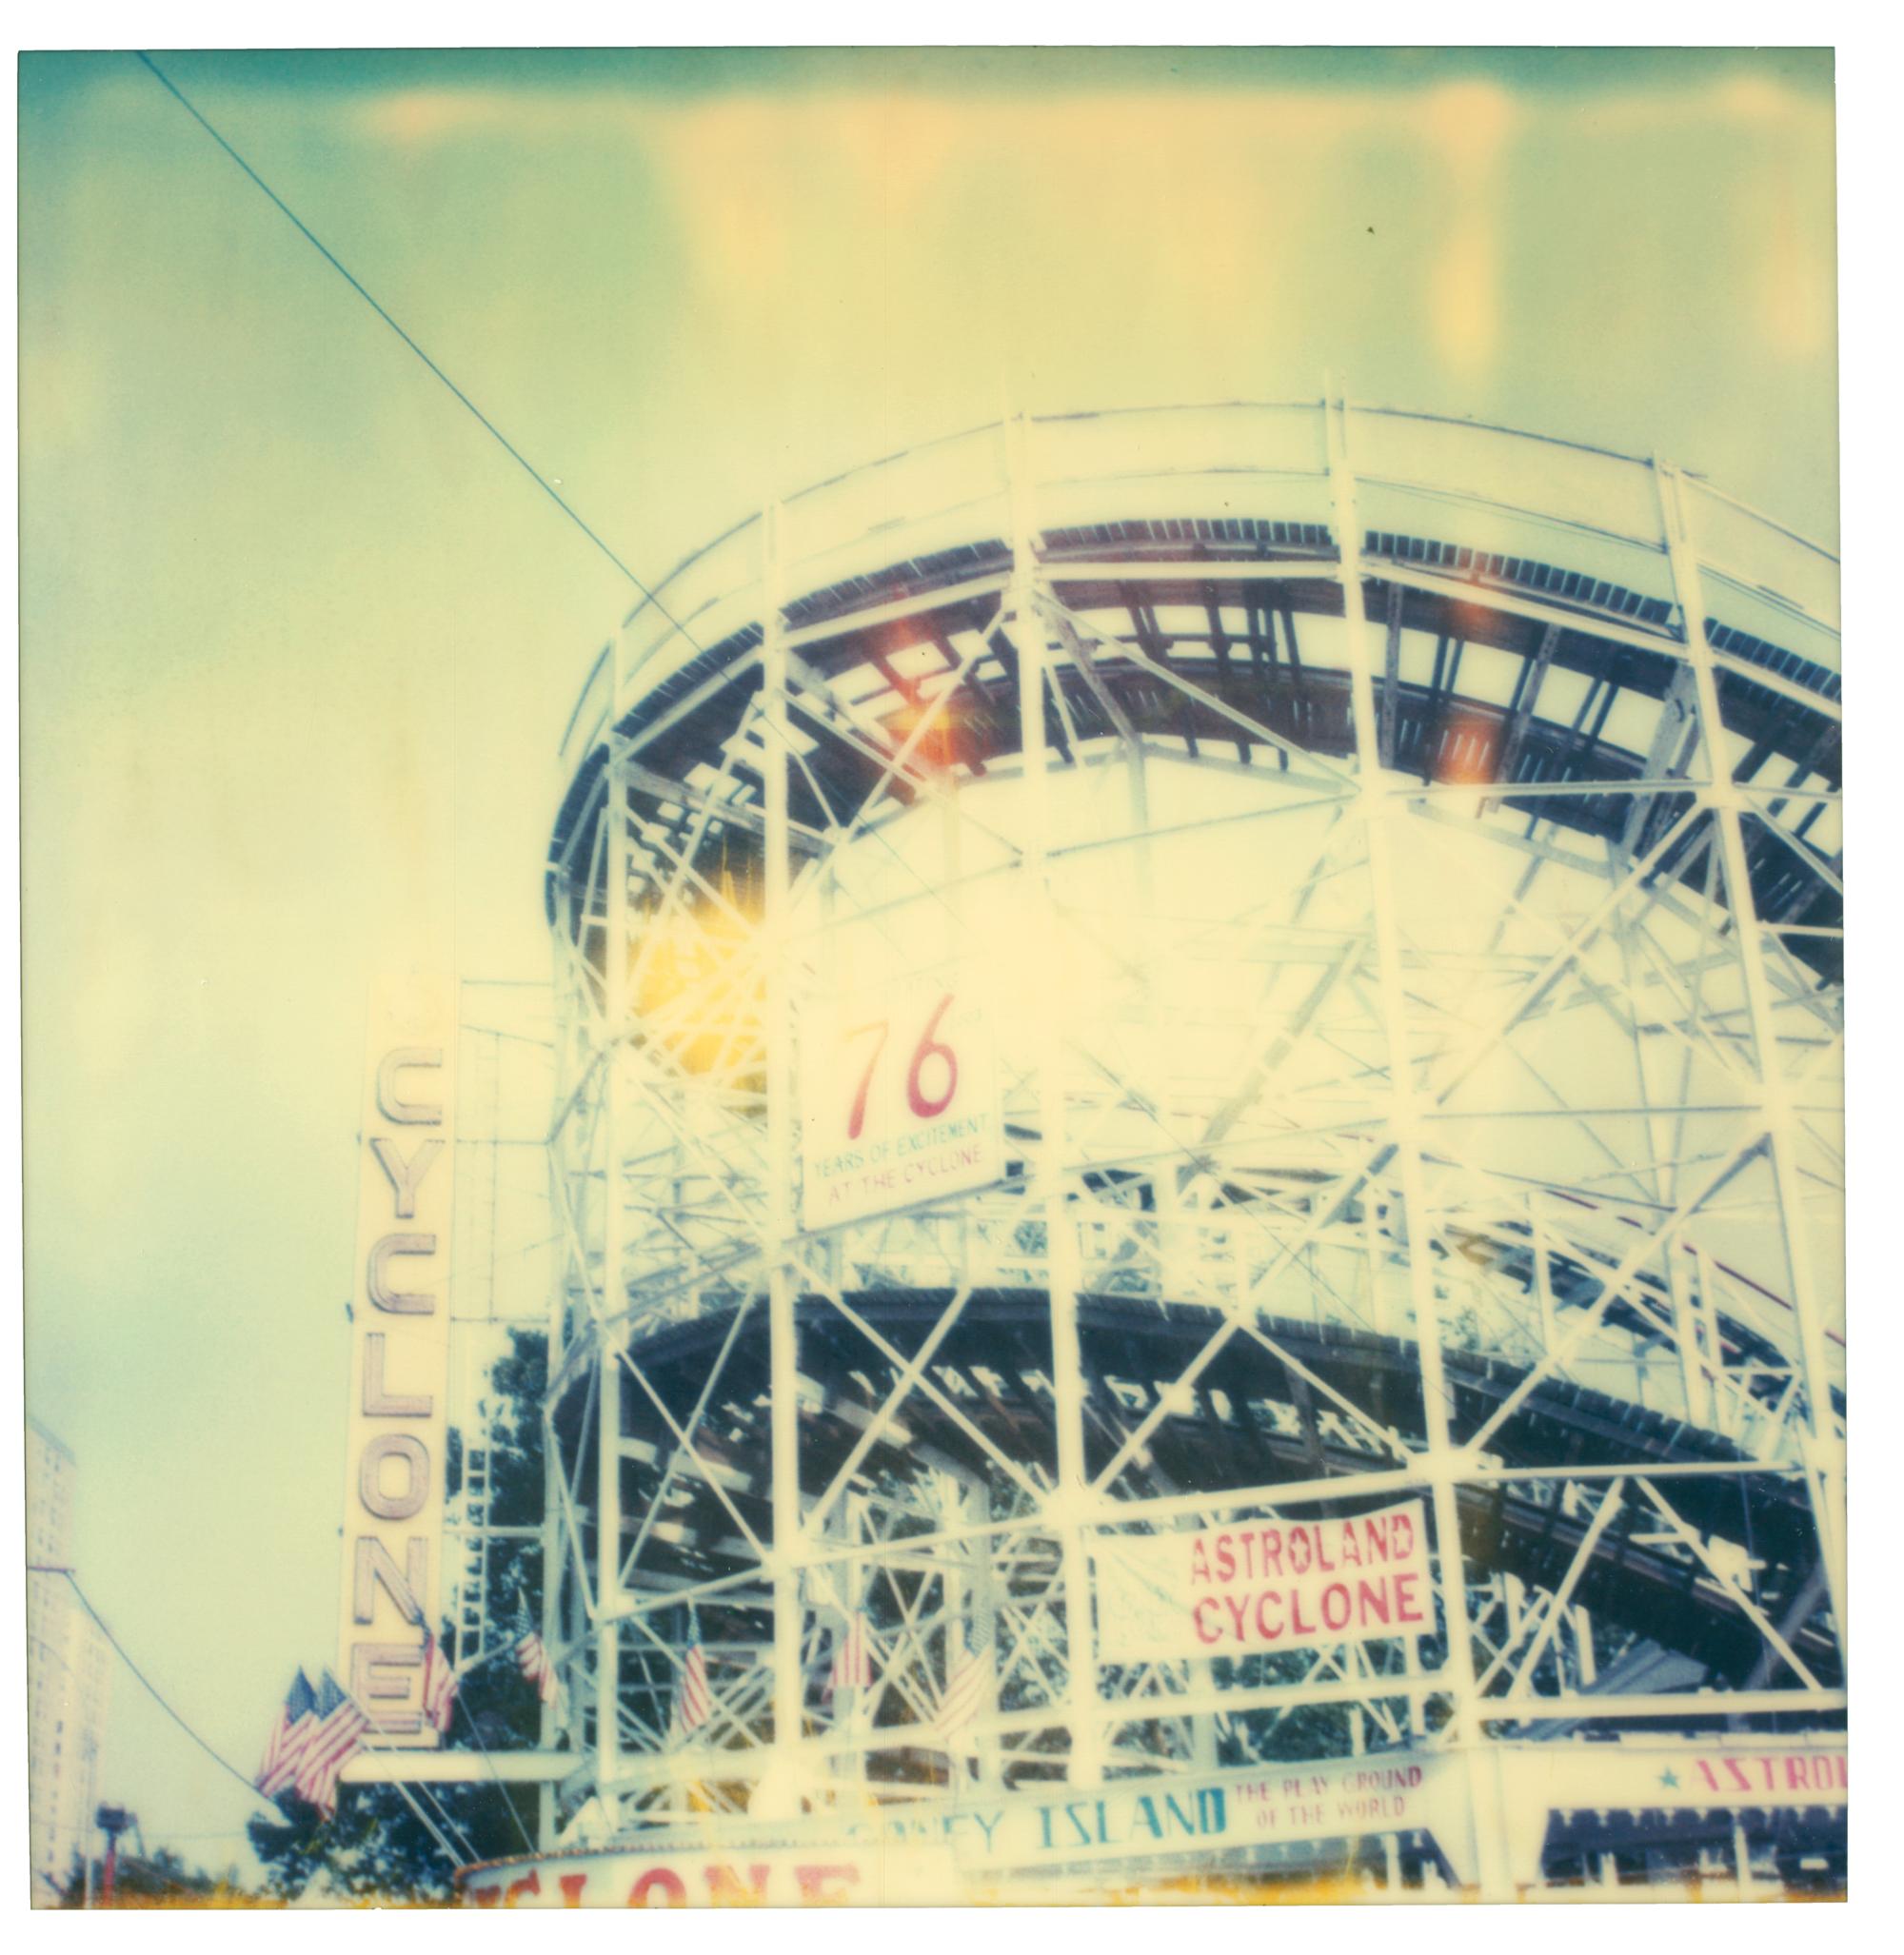 Stefanie Schneider Landscape Photograph - Cyclone, Coney Island, 21 Century, Contemporary, Icons, Landscape